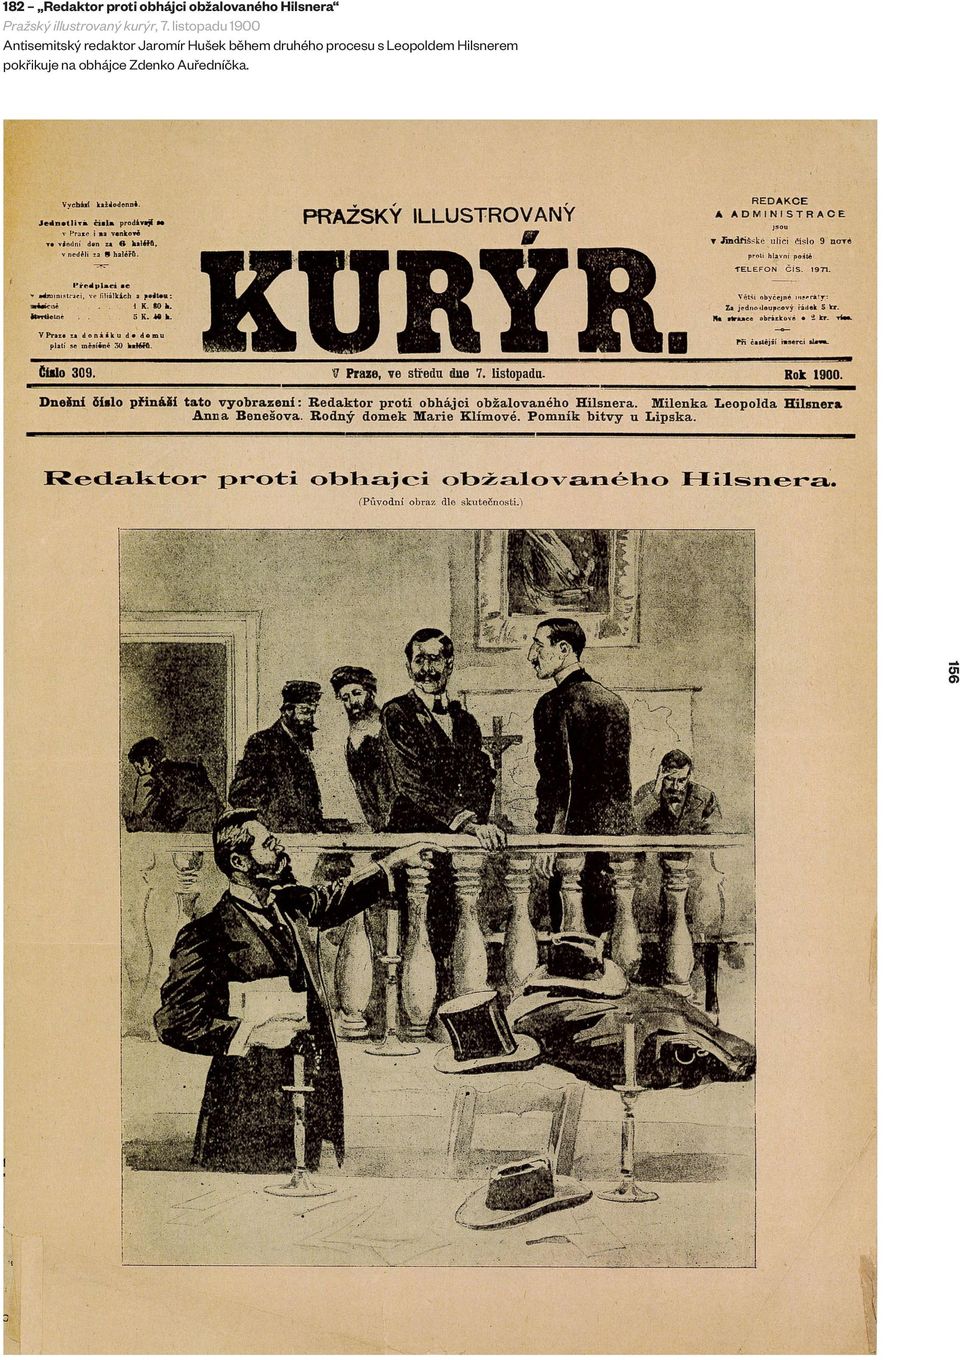 listopadu 1900 Antisemitský redaktor Jaromír Hušek